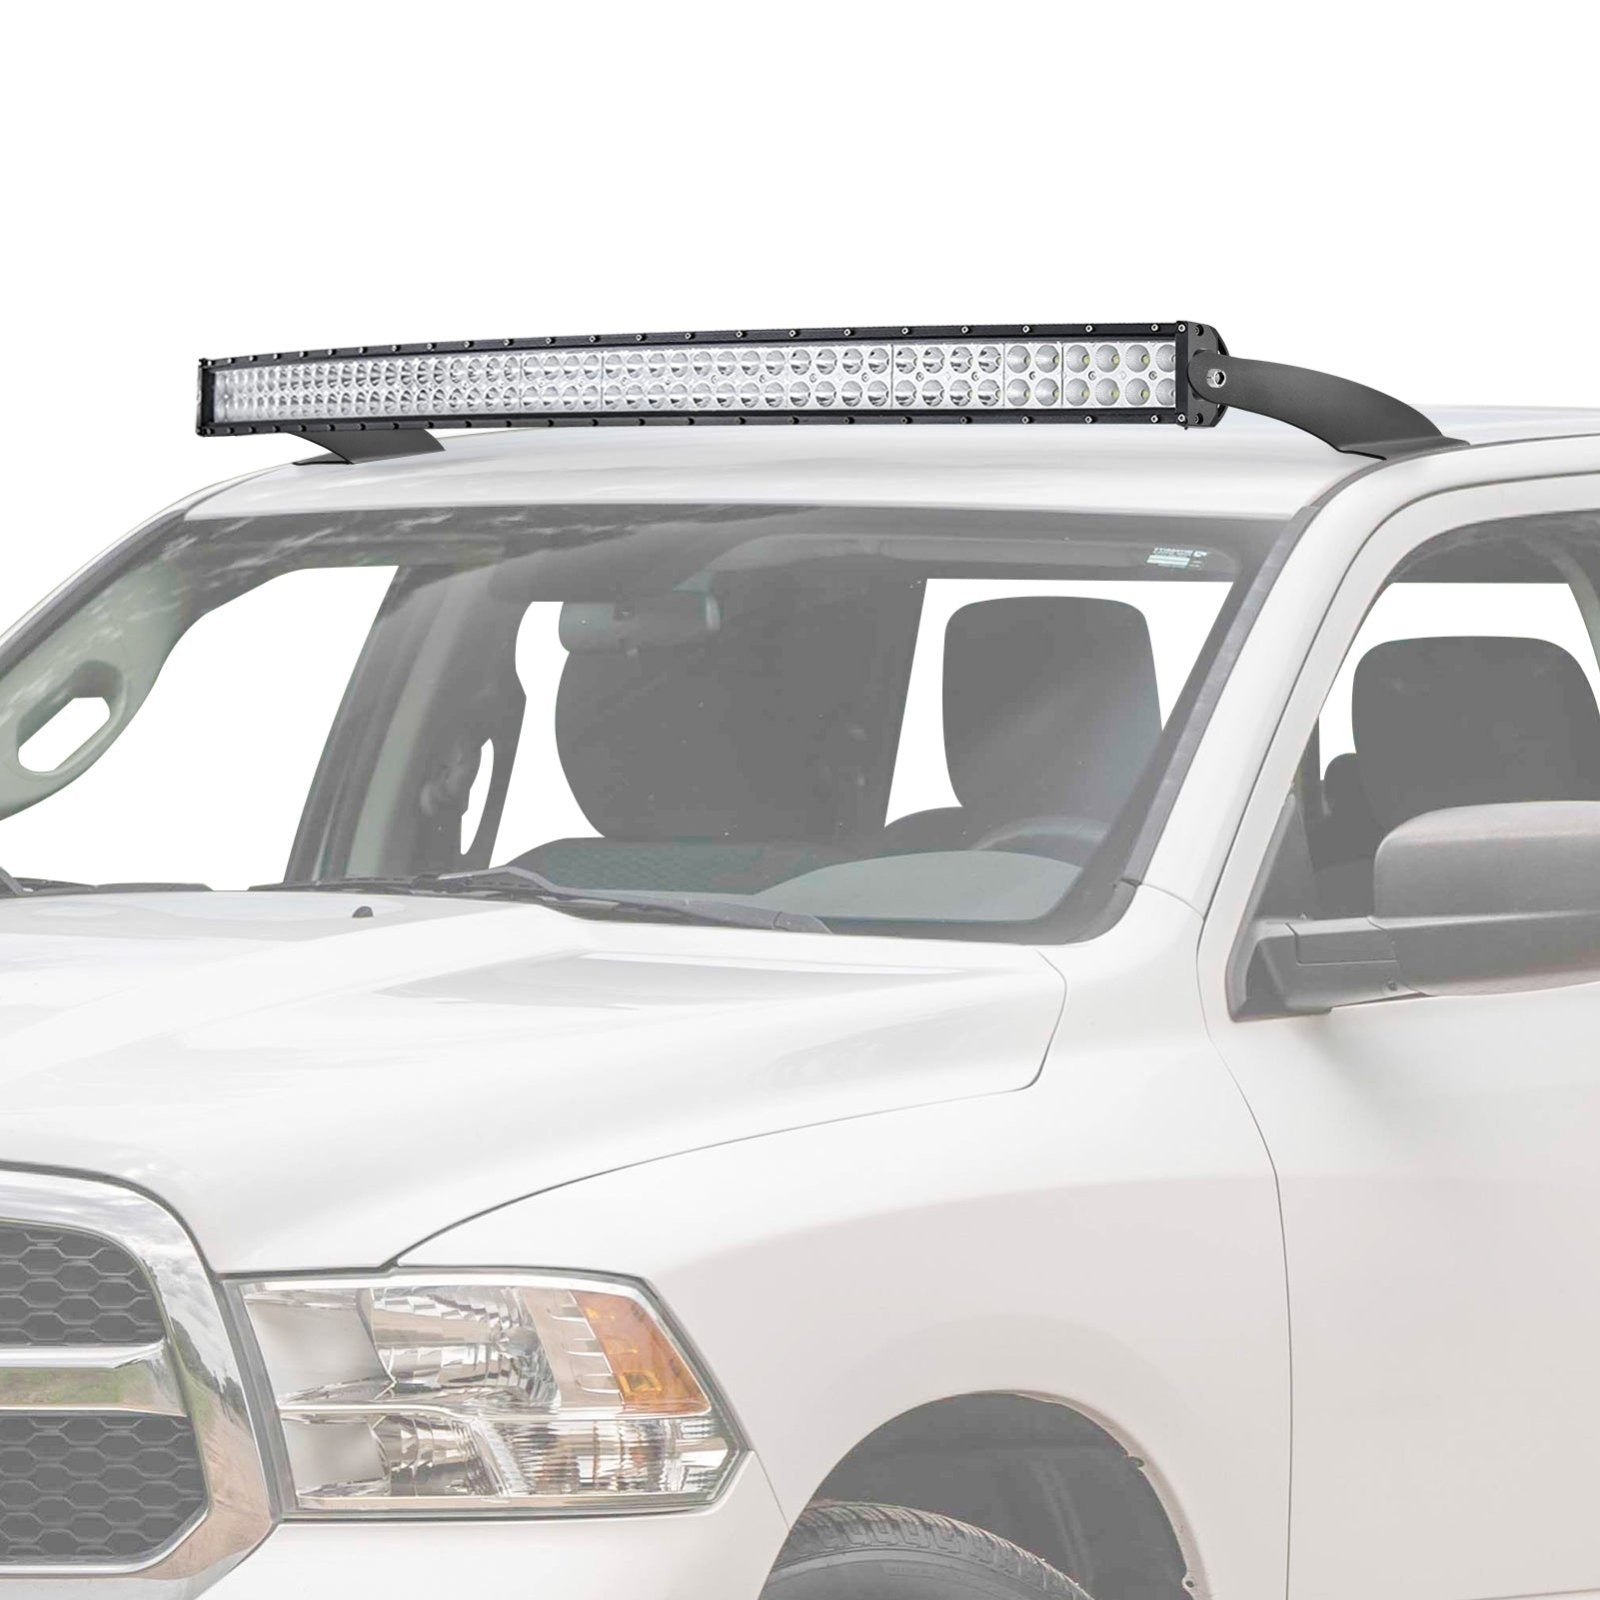 Dodge Ram 1500/2500/3500 52" Curved LED Light Bar Roof Bracket Mounts - Weisen